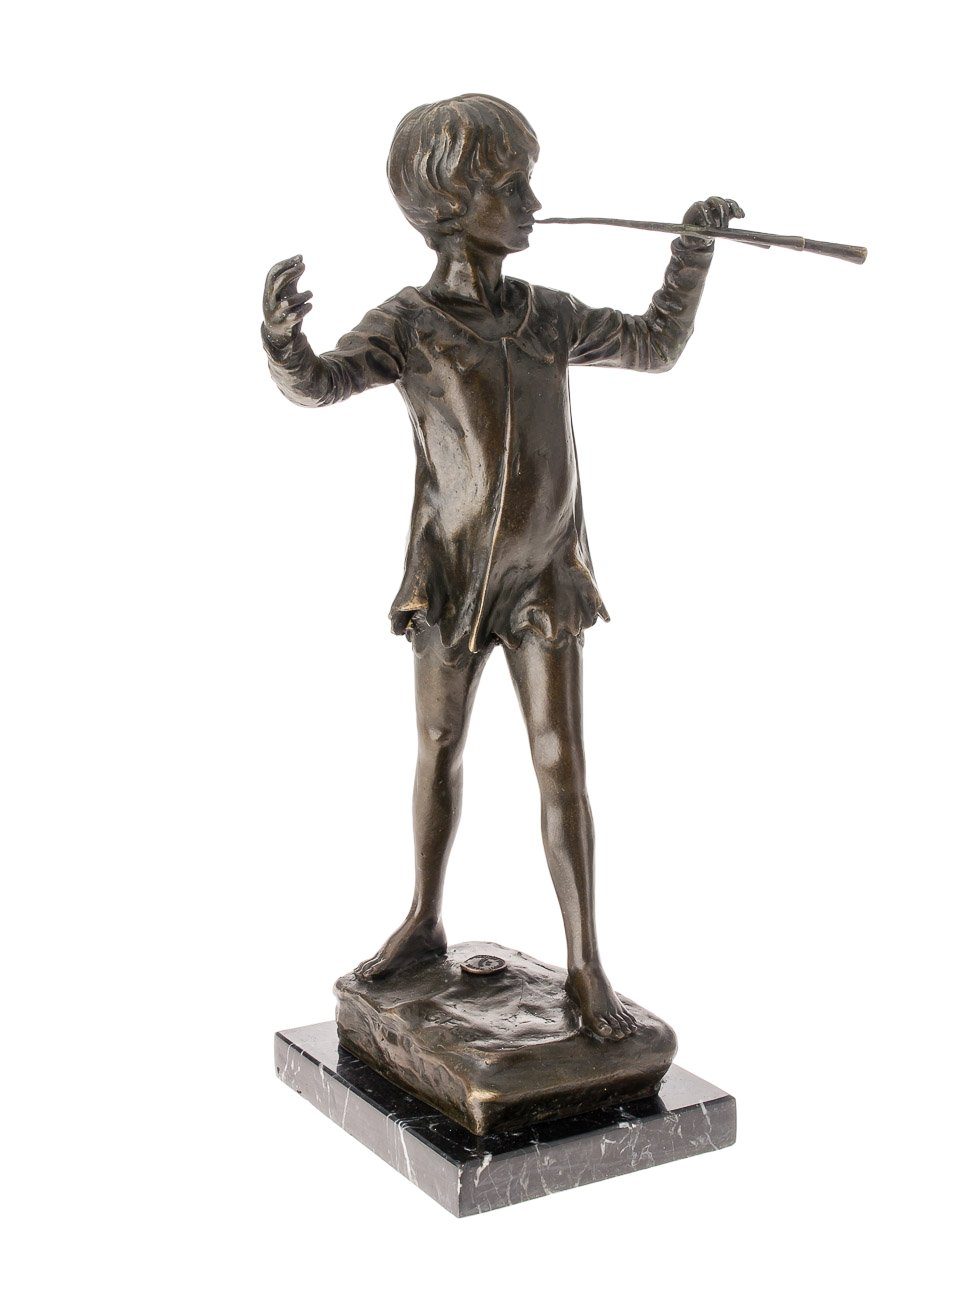 Aubaho Skulptur Bronzeskulptur Peter Pan nach George Frampton Bronze Skulptur Figur Re